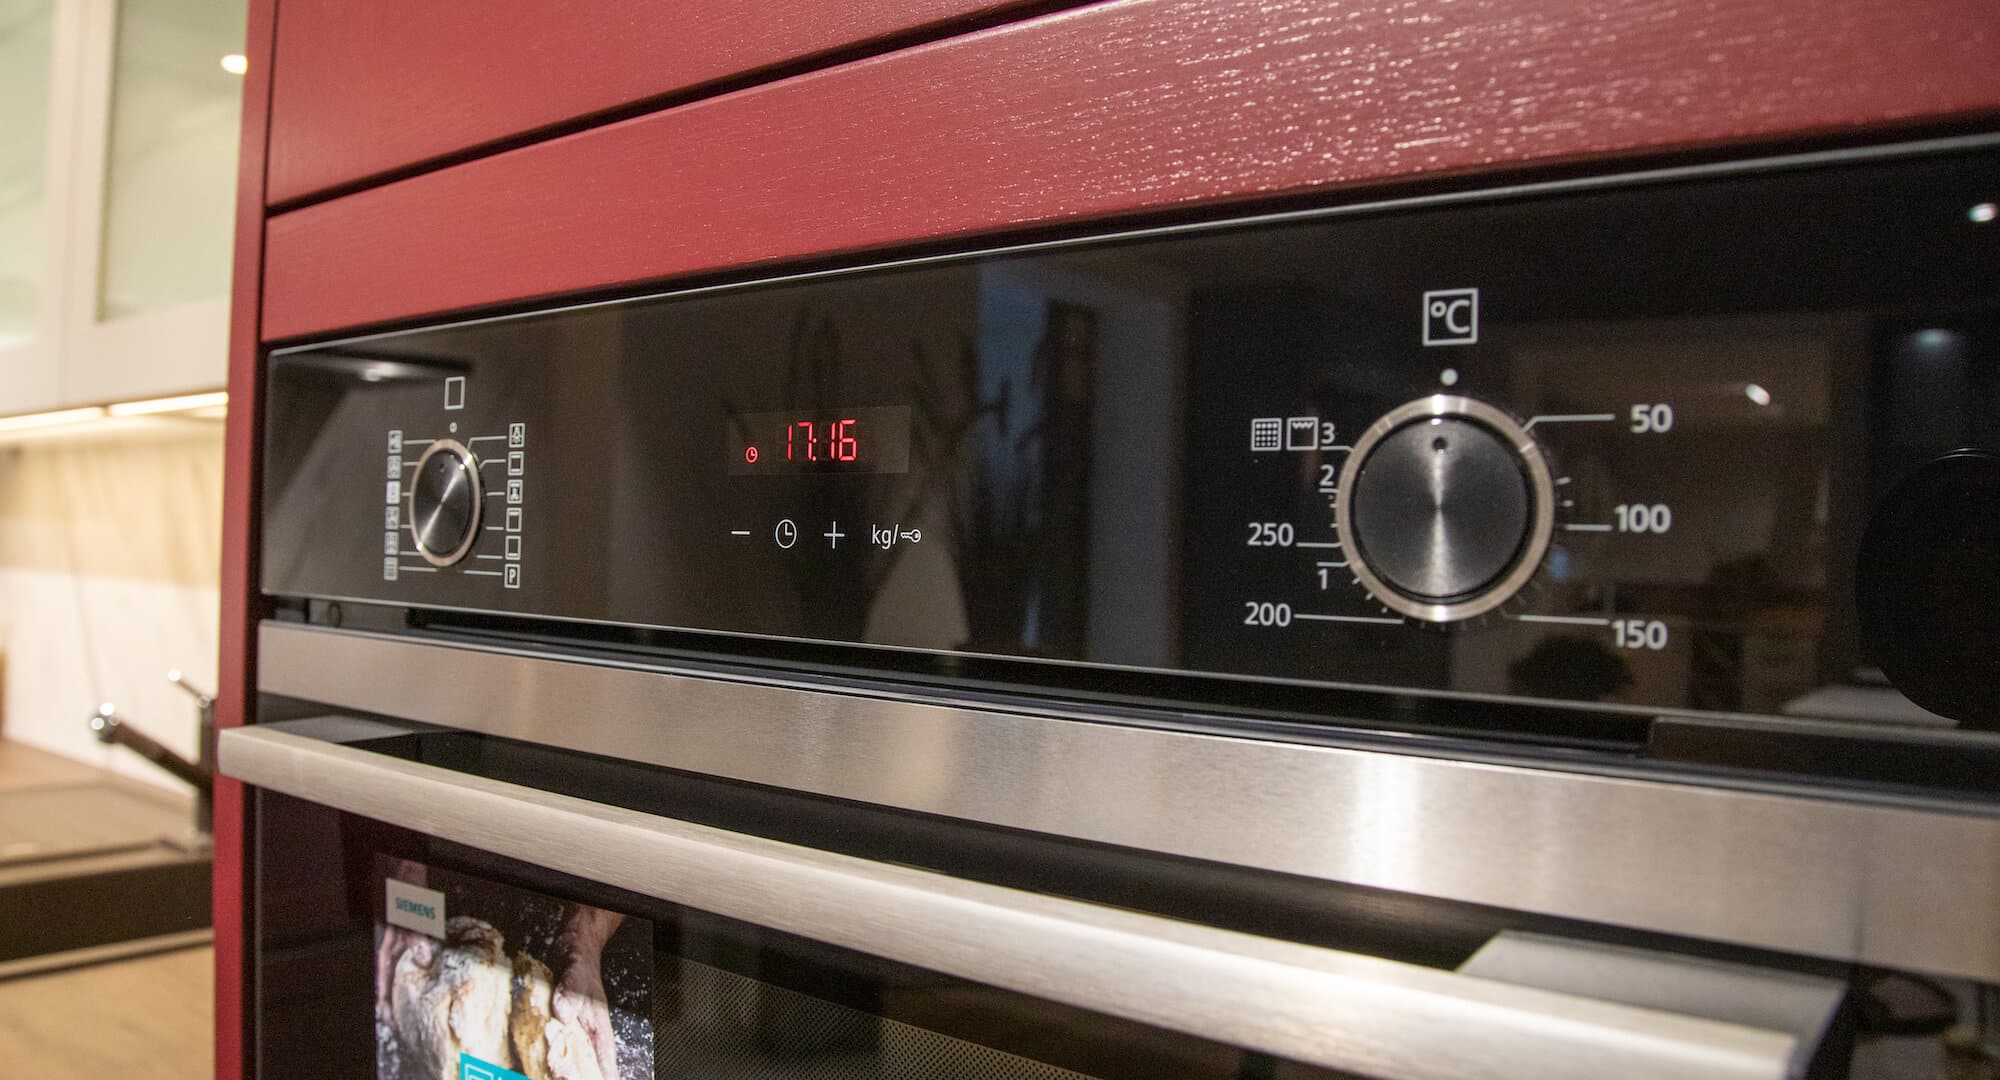 Häcker Landhausküche Esche lackiert Display Siemens Backofen